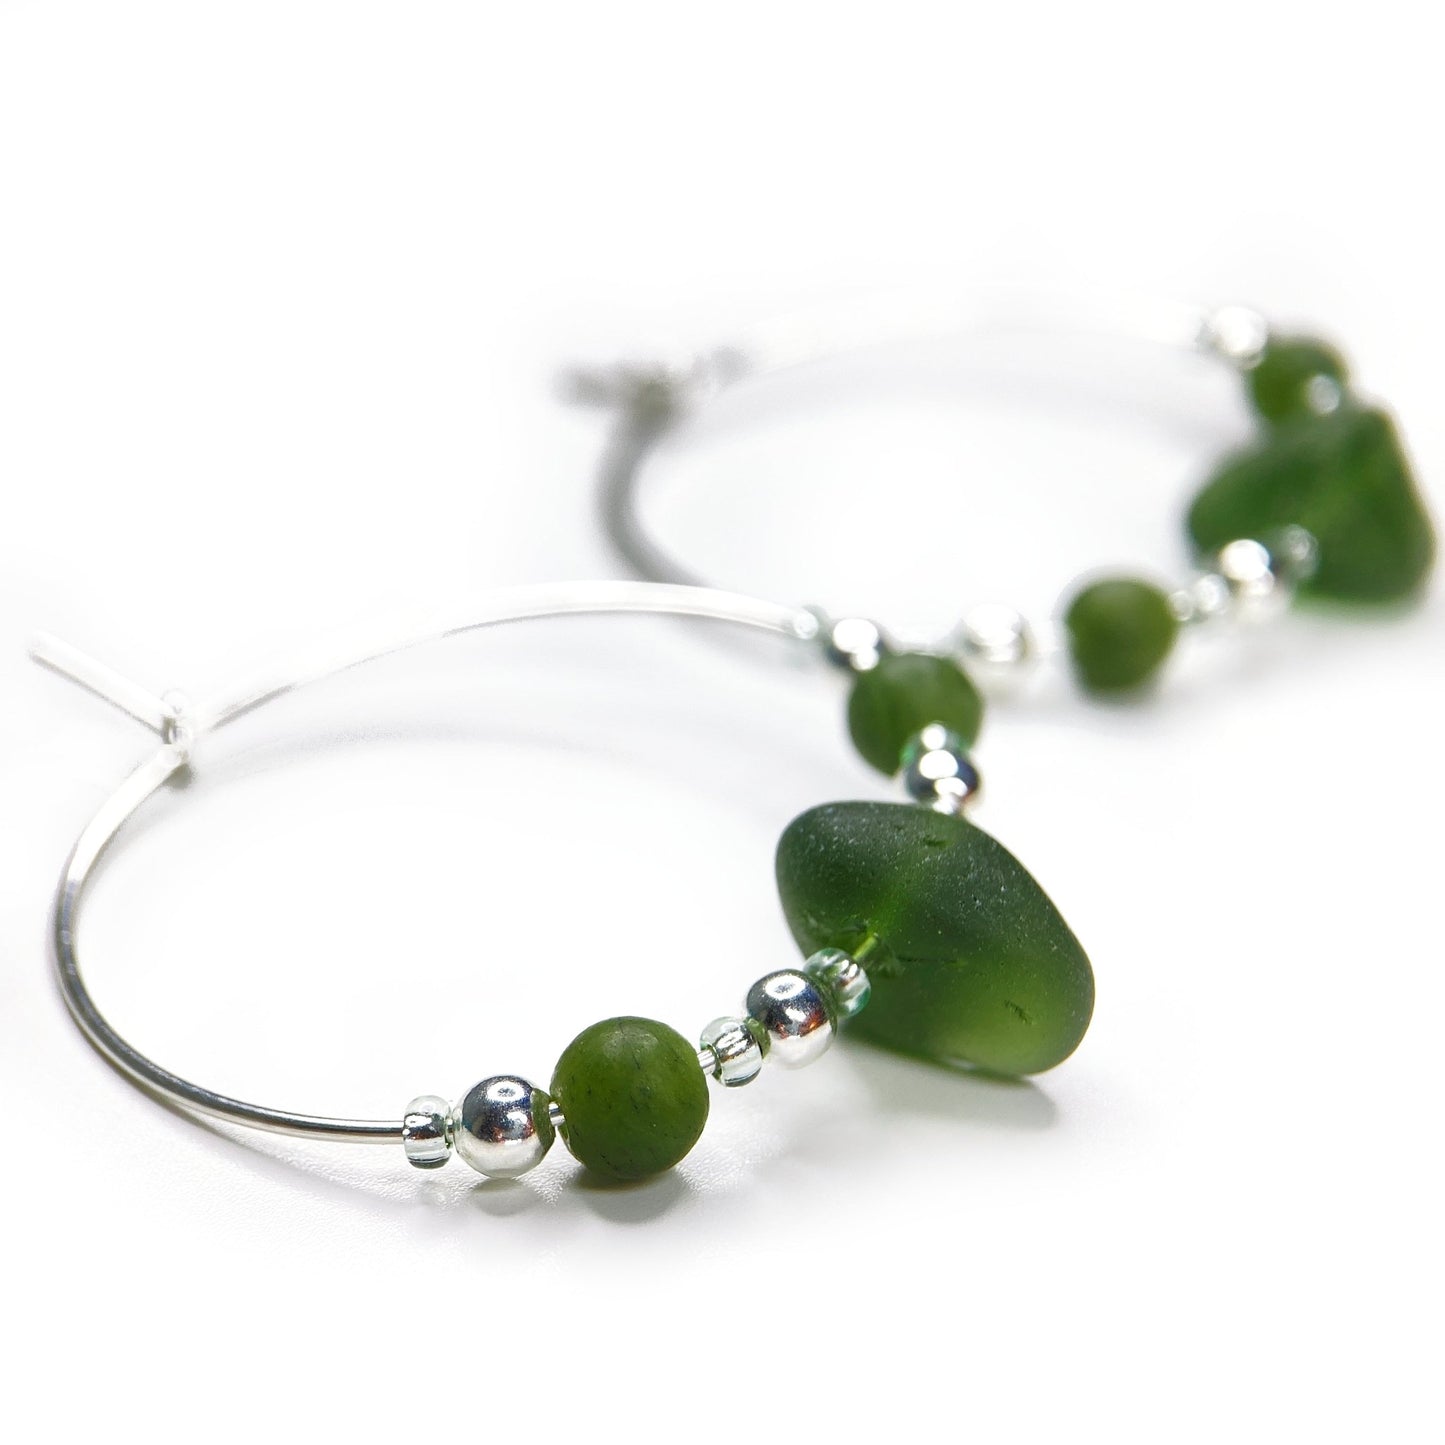 Large Green Sea Glass Hoop Earrings - 3cm - Sterling Silver with Jade Crystal Beads - East Neuk Beach Crafts